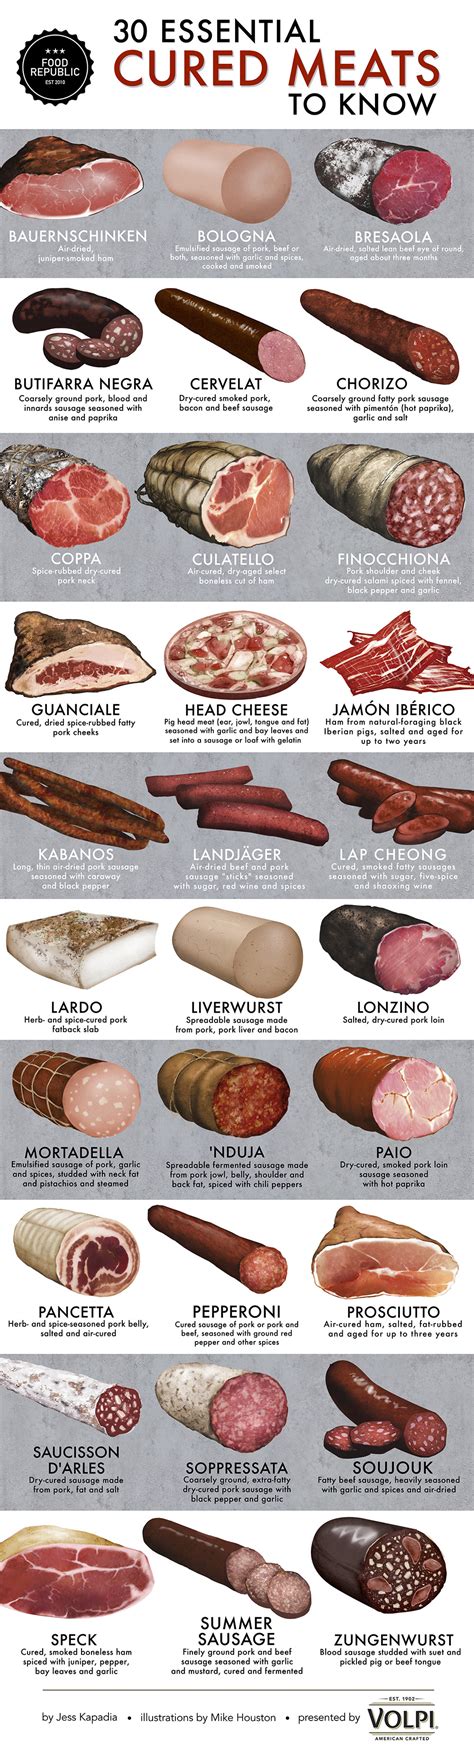 essential cured meats   food republic